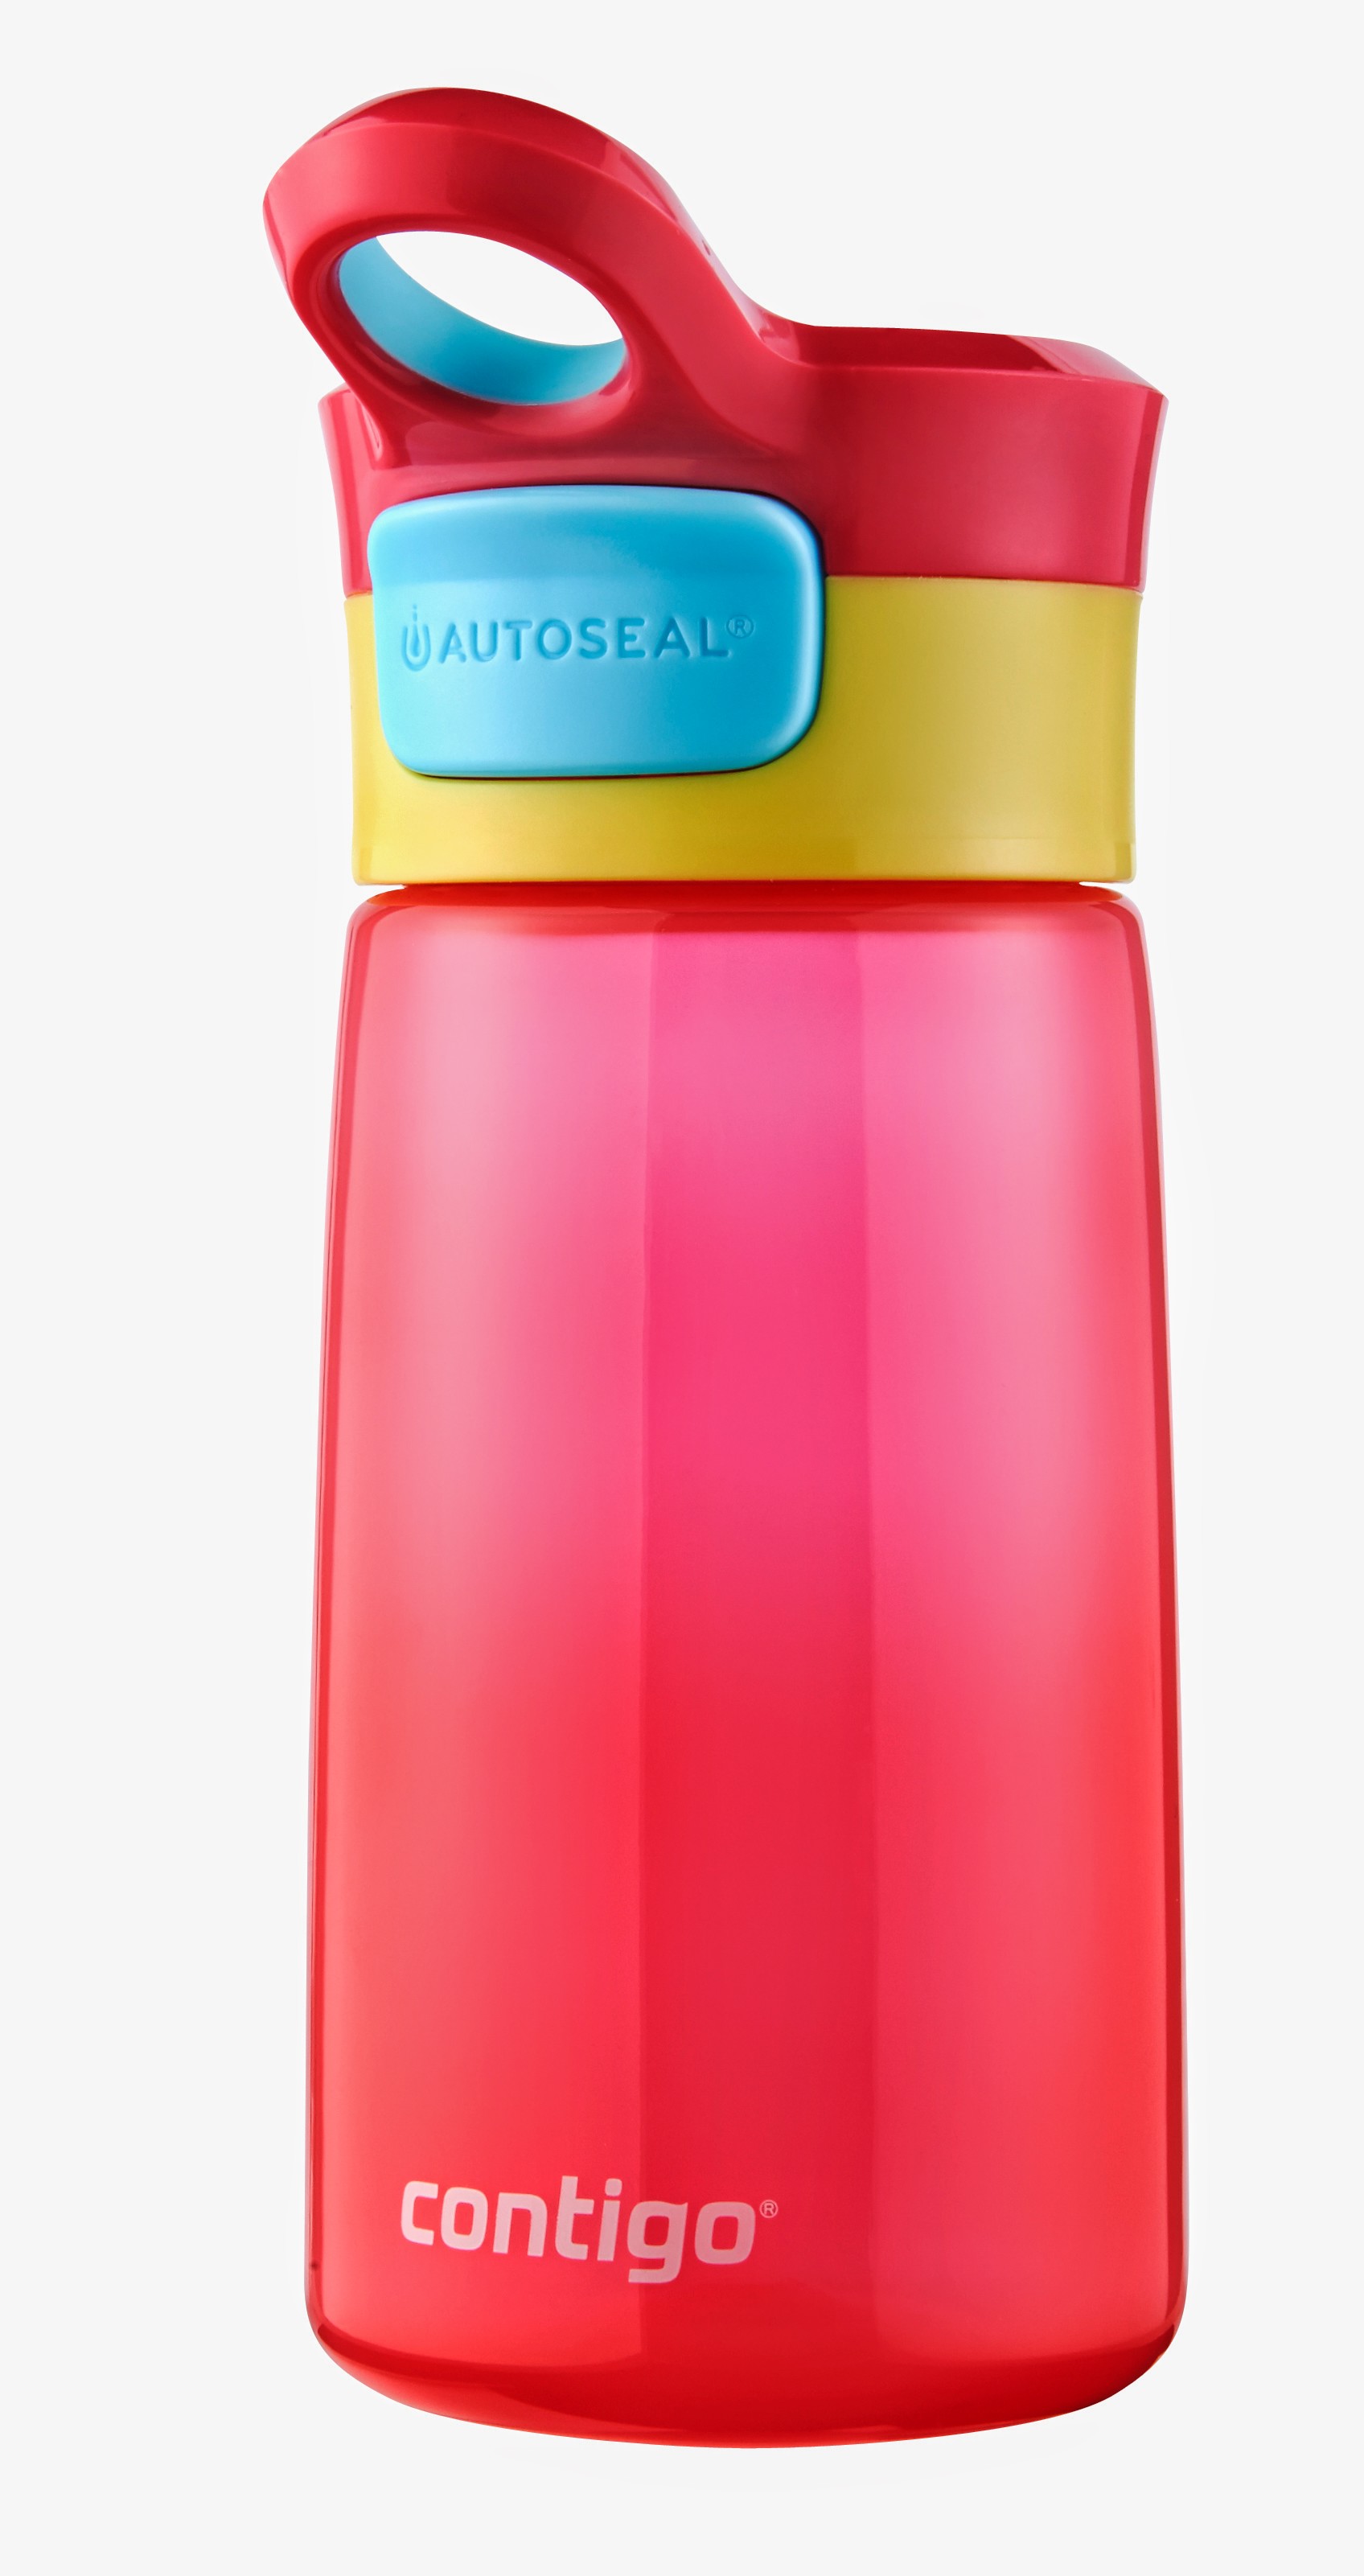 http://charlottesmartypants.com/wp-content/uploads/2014/08/Contigo-AUTOSEAL-Gracie-Kids-Bottle-Cherry-Blossom.jpg